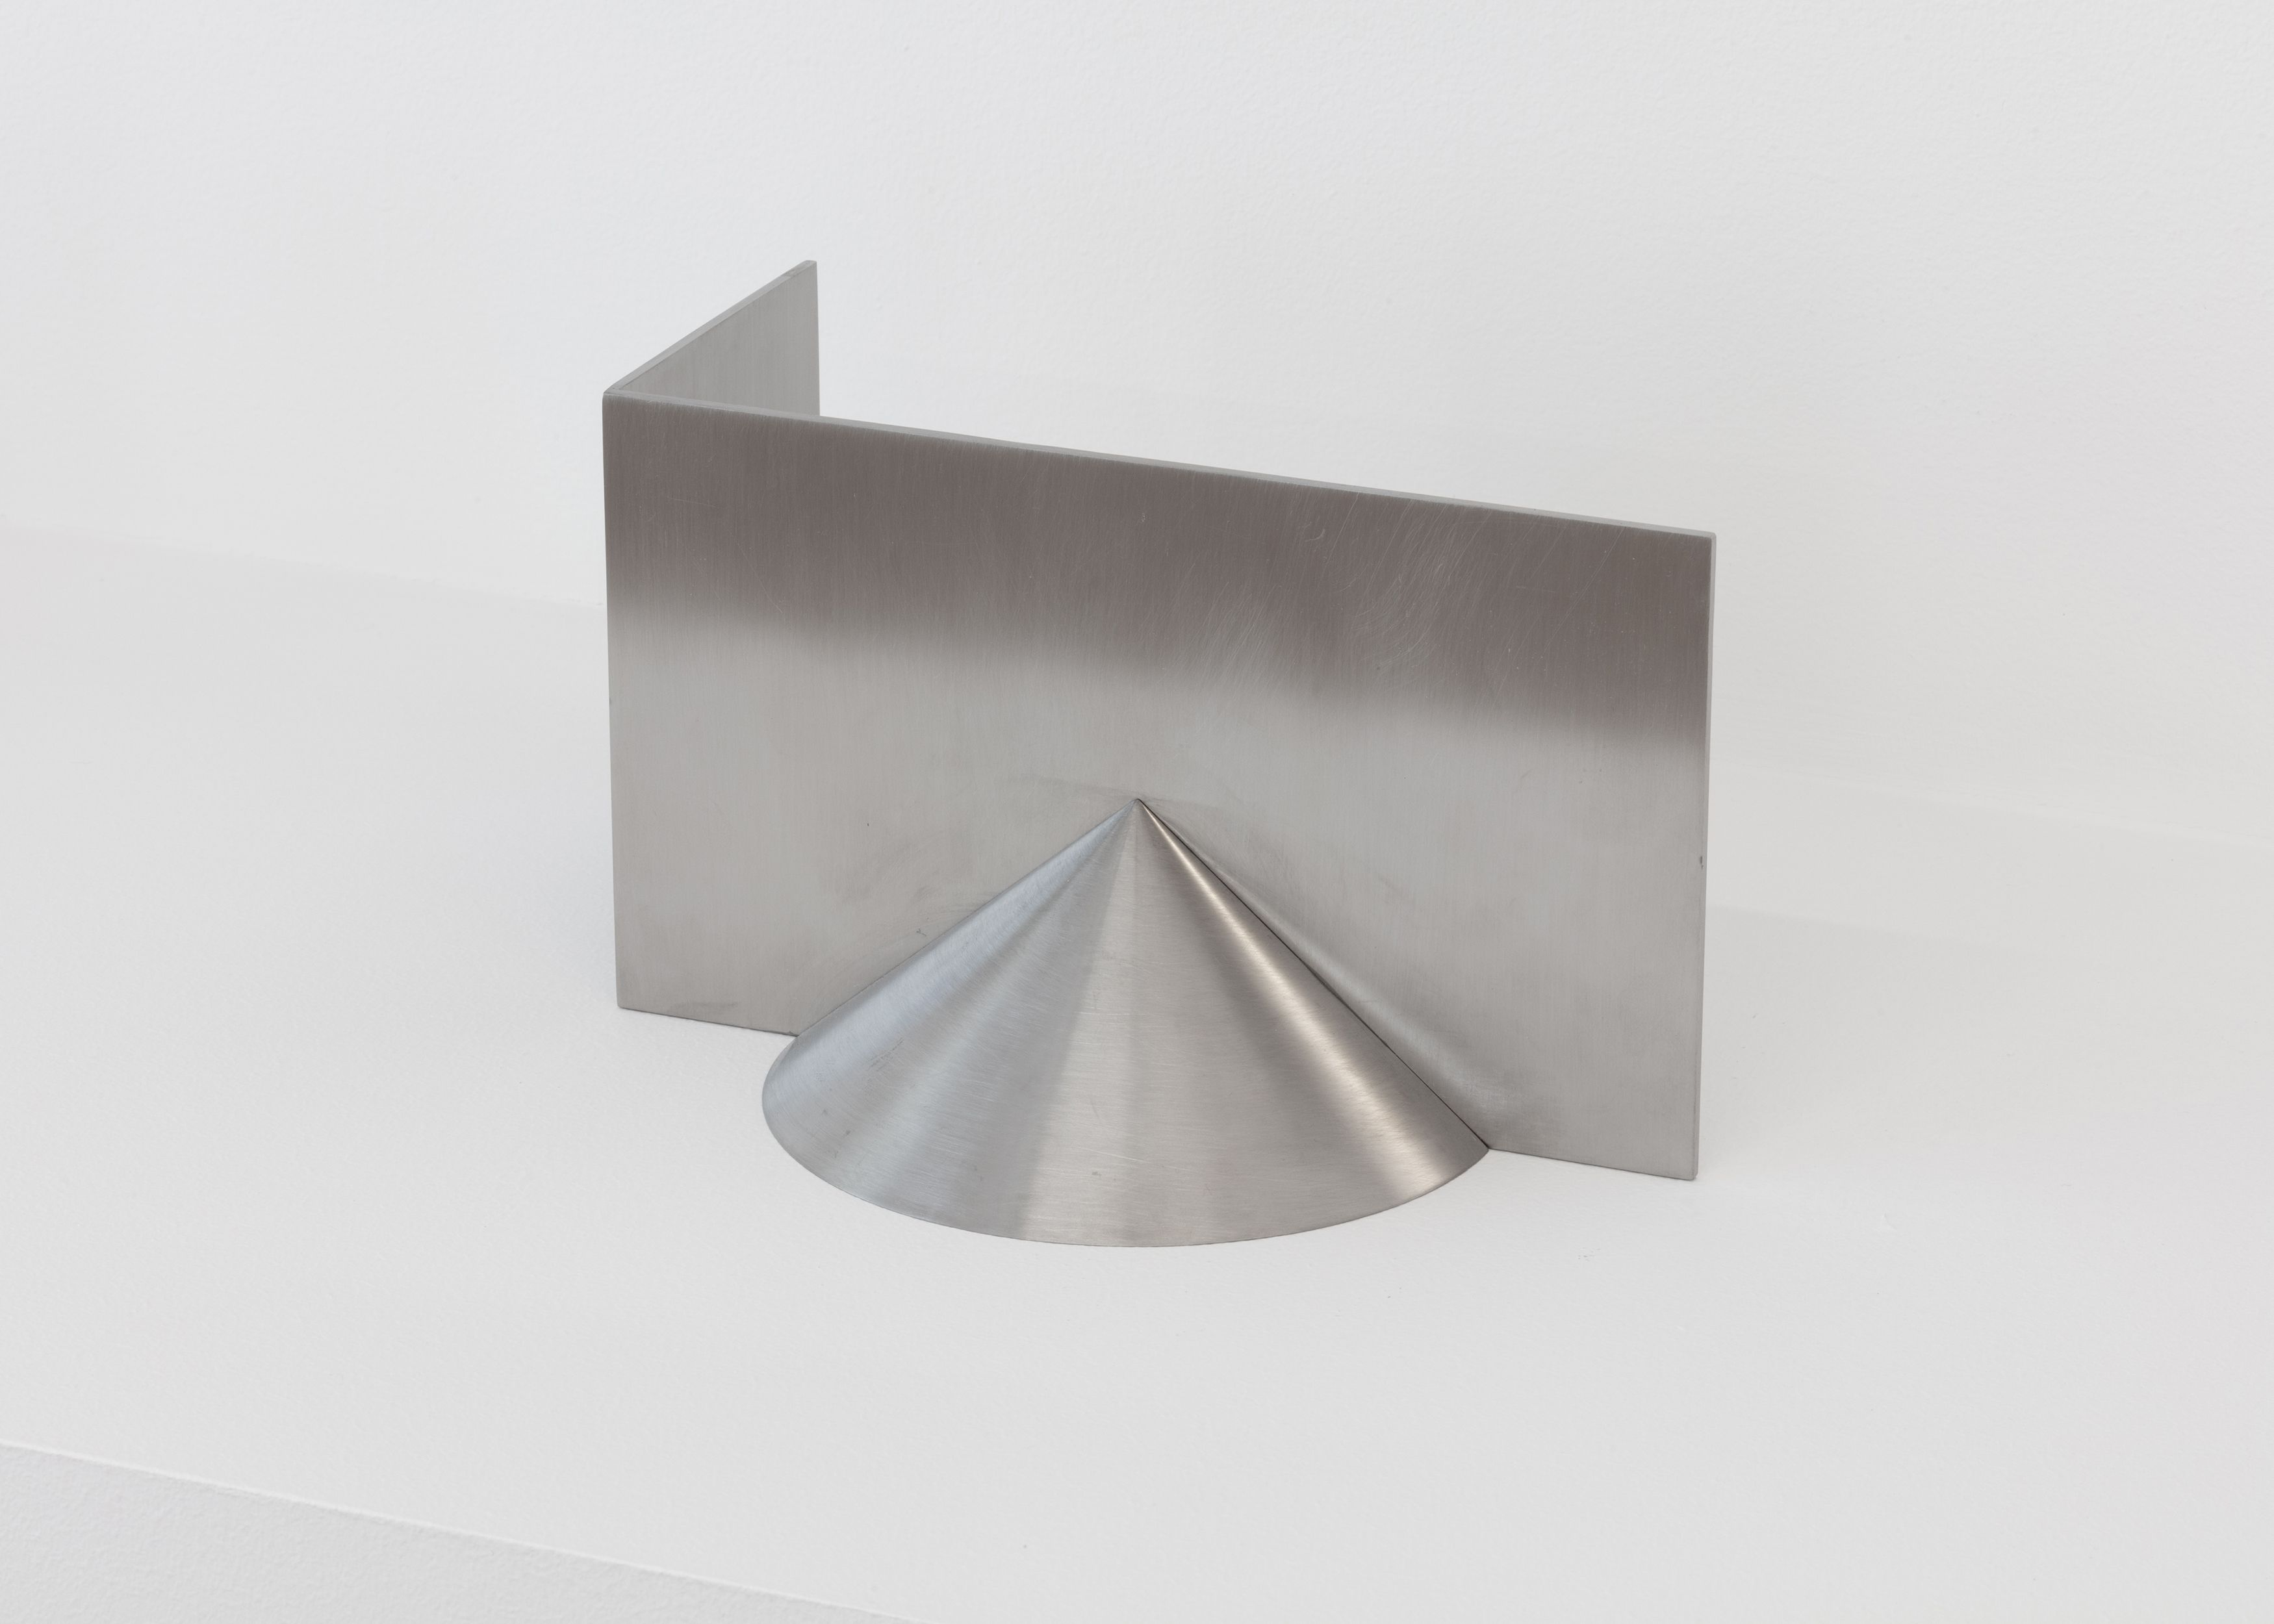 Stephen Lichty, Form 1, 2021, stainless steel, 4 x 7 x 5 in. (10.16 x 17.78 x 12.7 cm)